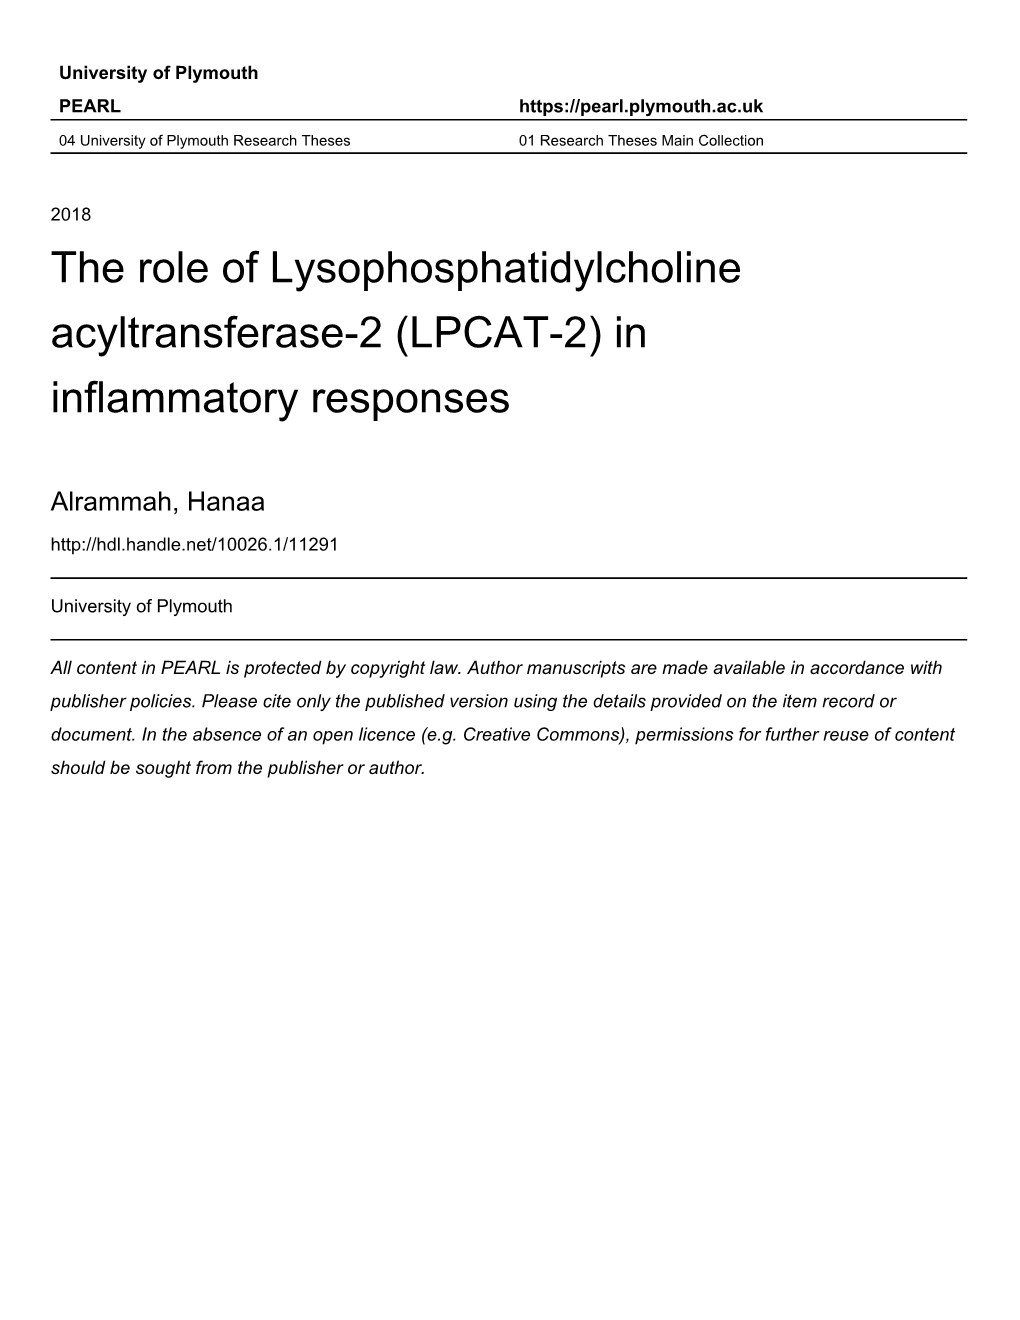 (LPCAT-2) in Inflammatory Responses